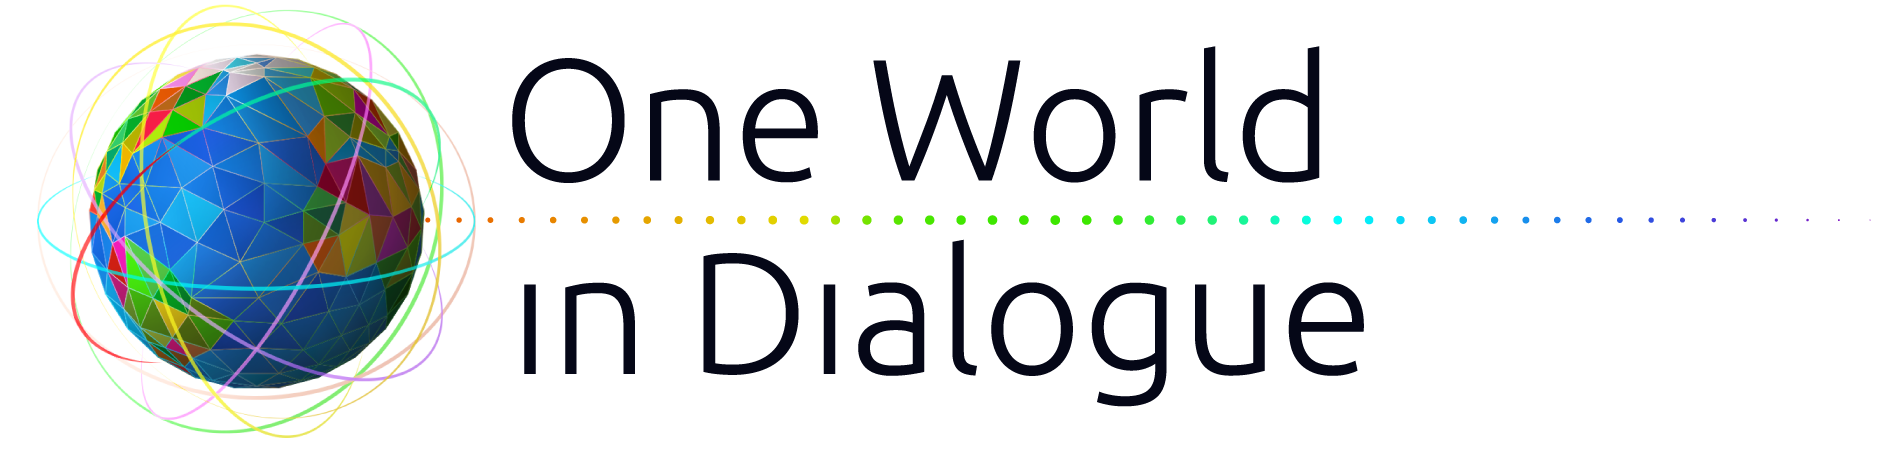 One World. One World members. First мир. World dialog